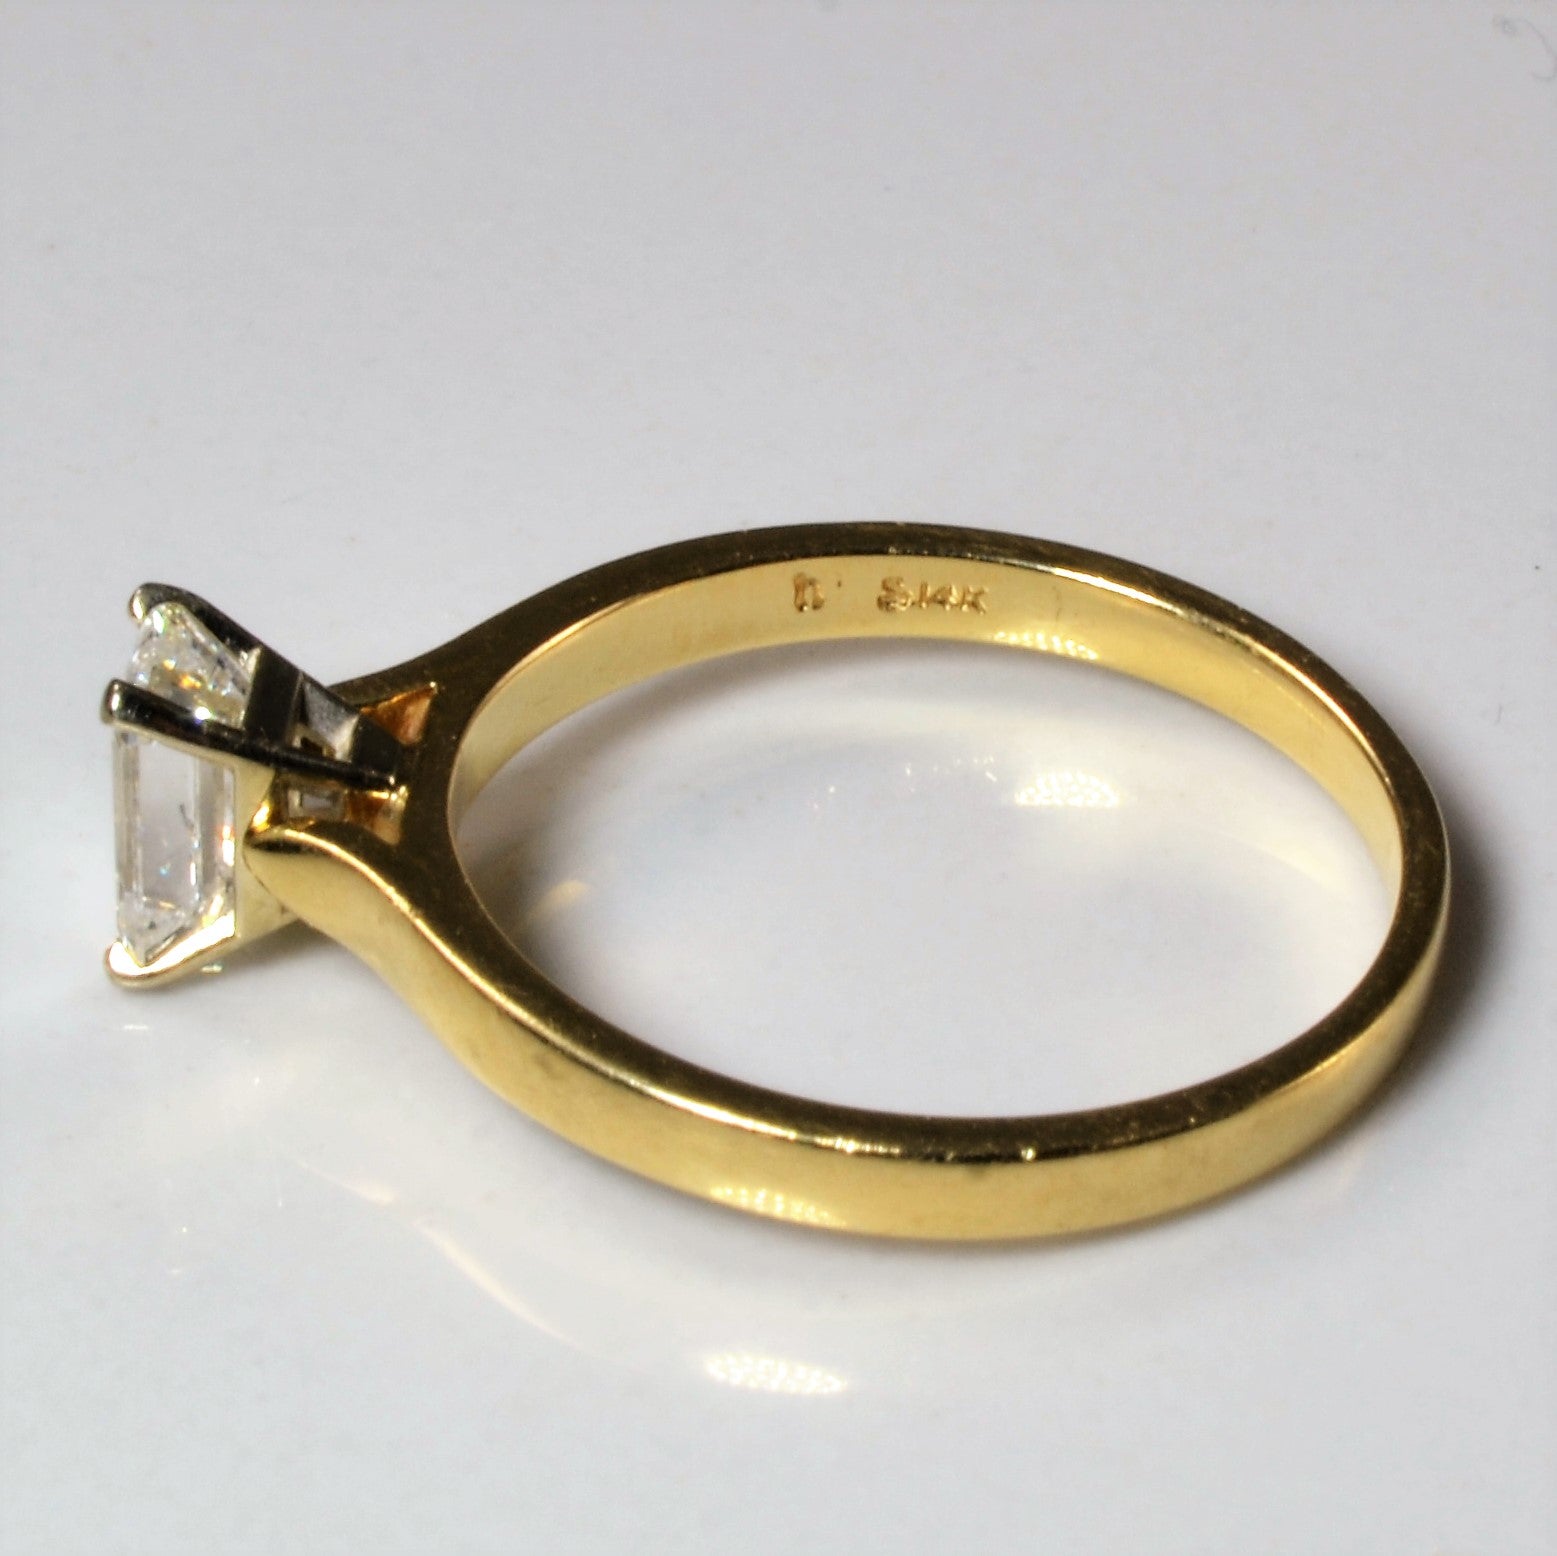 Emerald Cut Diamond Solitaire Engagement Ring | 0.70ct | SZ 6.25 |